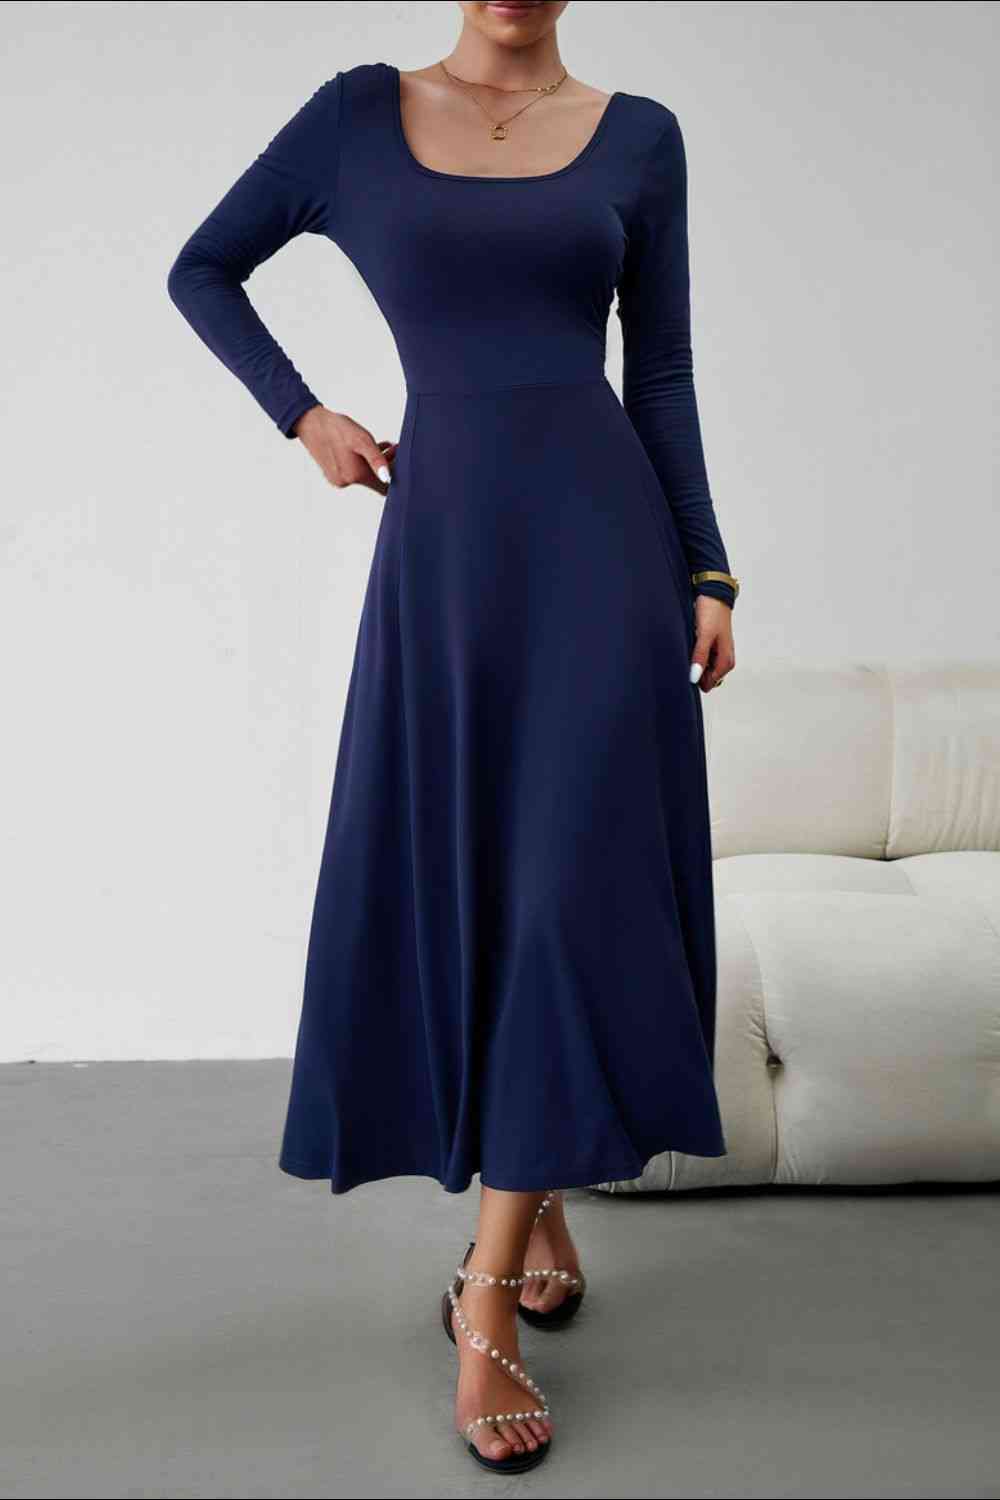 Scoop Neck Long Sleeve Lace-Up Maxi Dress (BWMT) T - Deals DejaVu